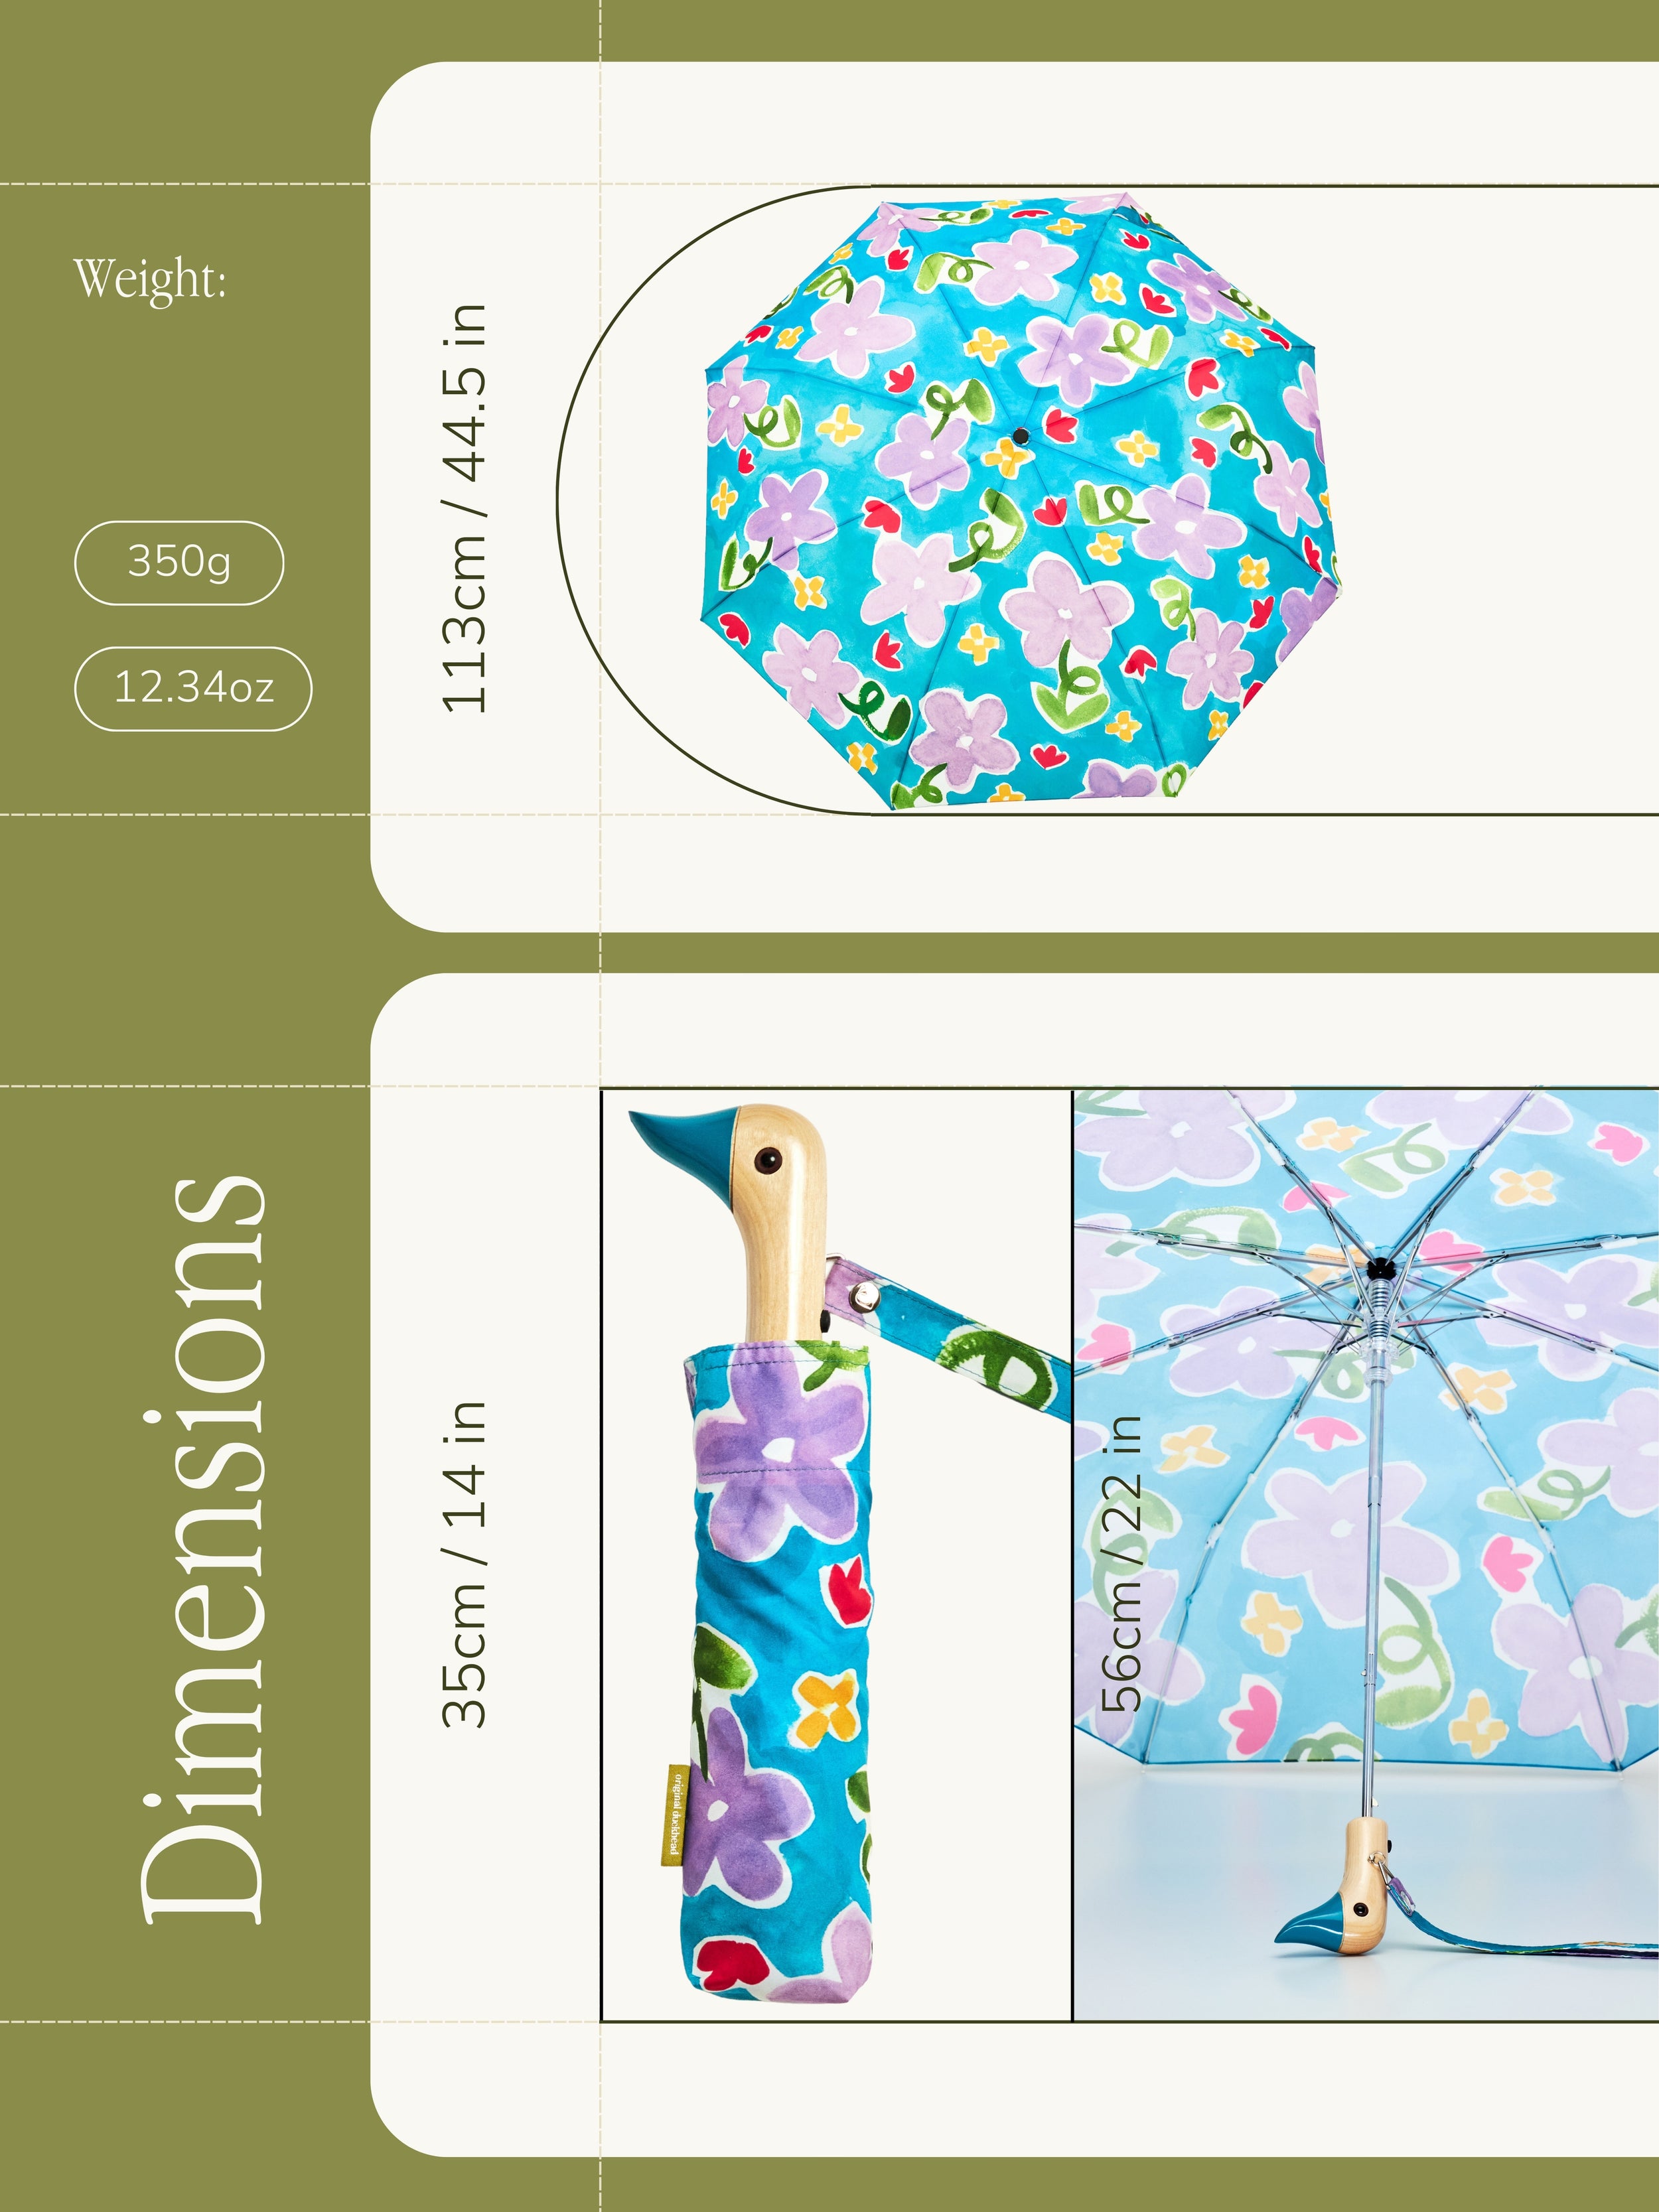 Lilas' Dream Eco-Friendly Umbrella.